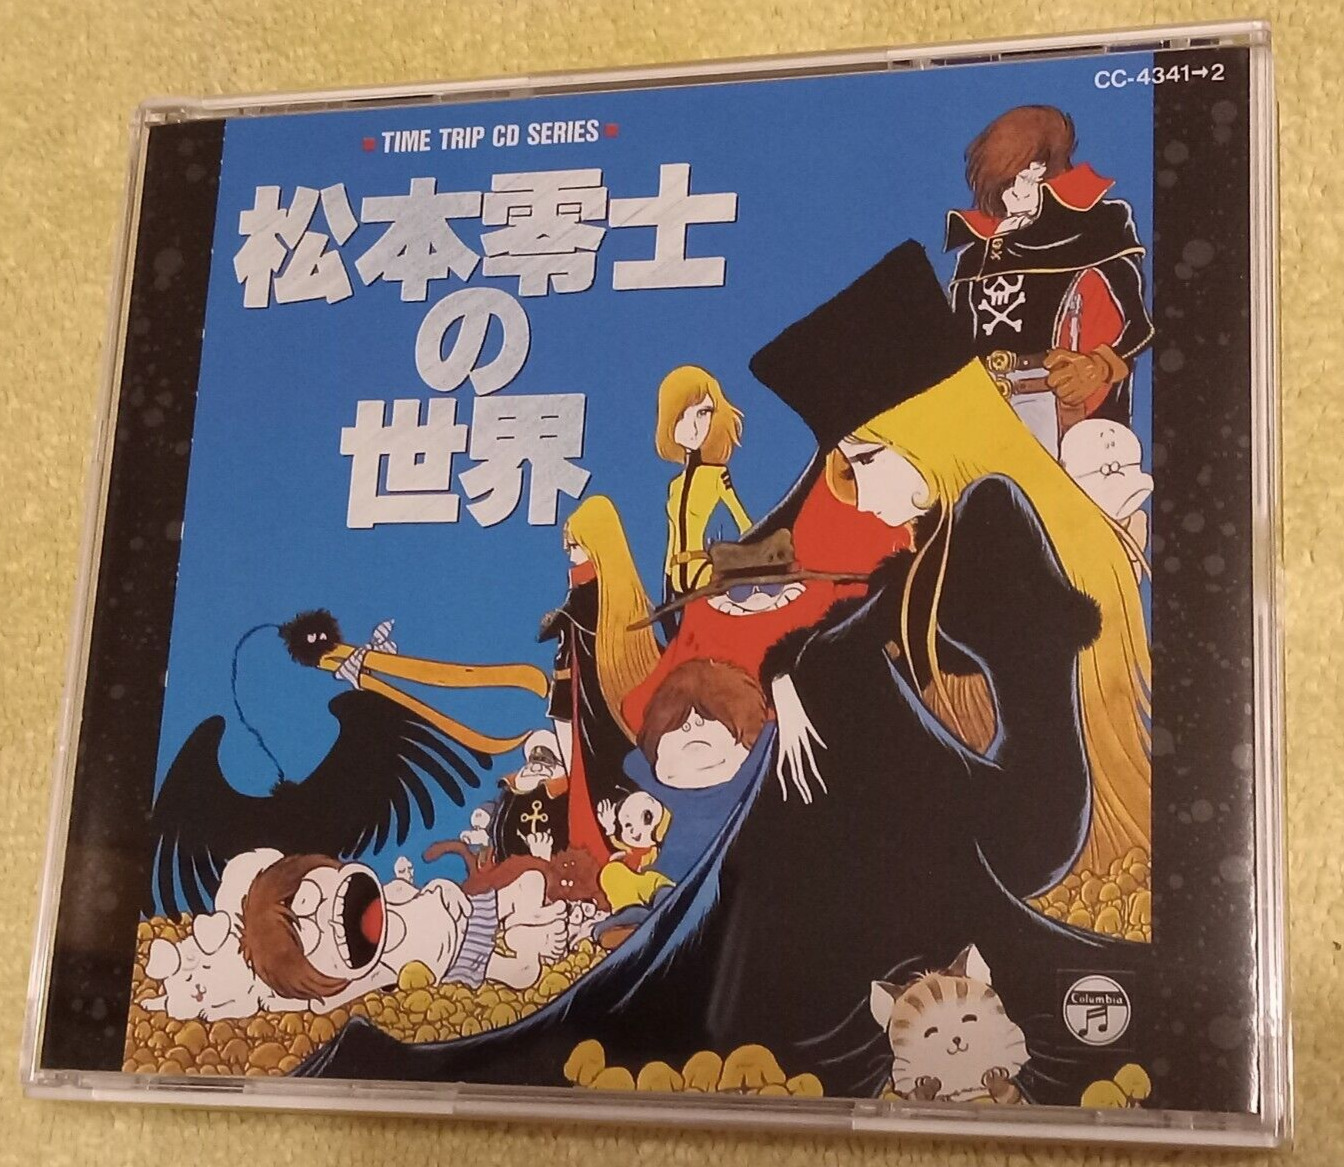 WORLD OF LEIJI MATSUMOTO CD 1989 Time Trip Yamato Harlock Star Blazers 2 Disc